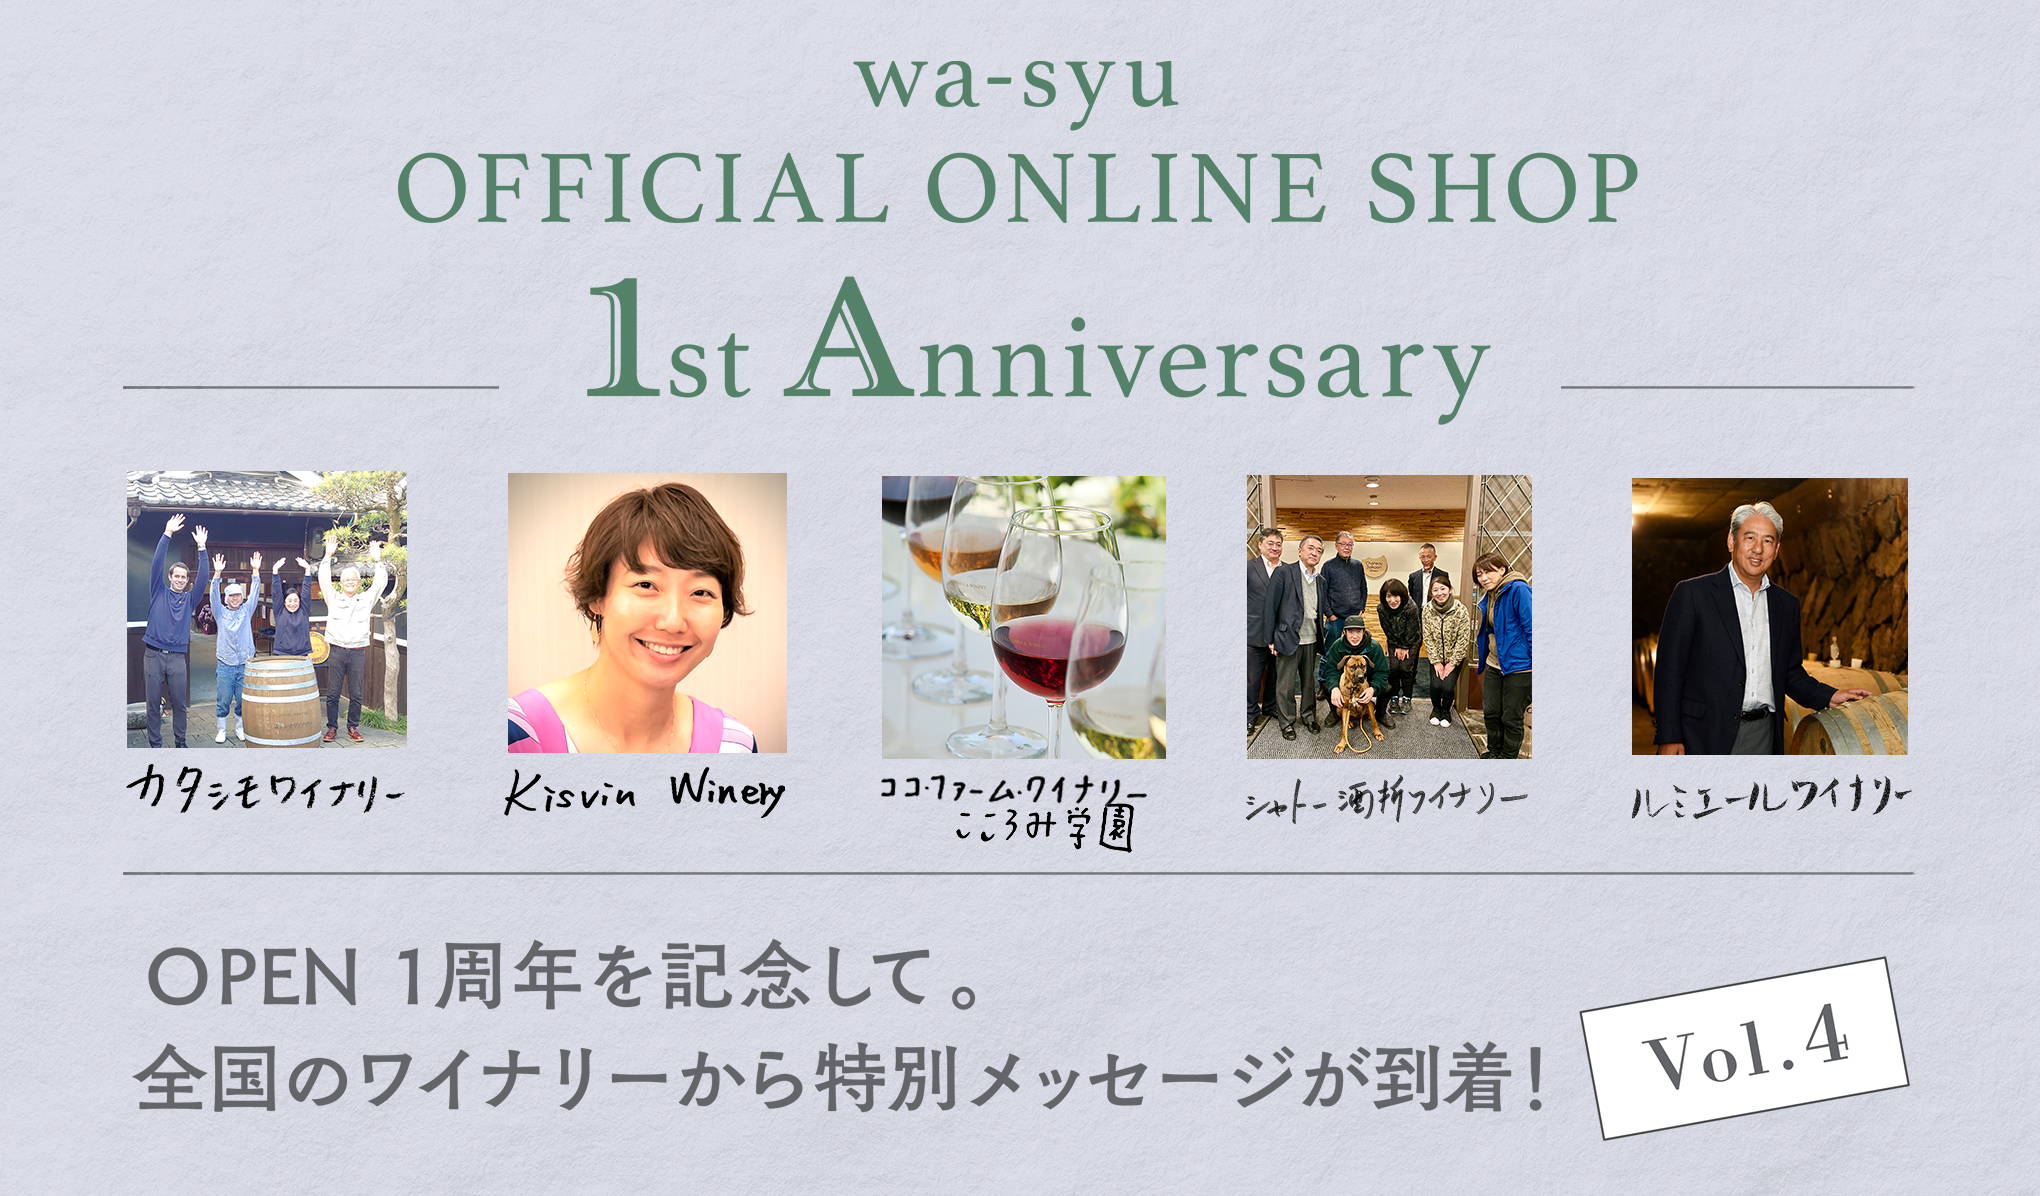 wa-syu 1st Anniversary｜全国のワイナリーより特別メッセージ Vol.4が到着！